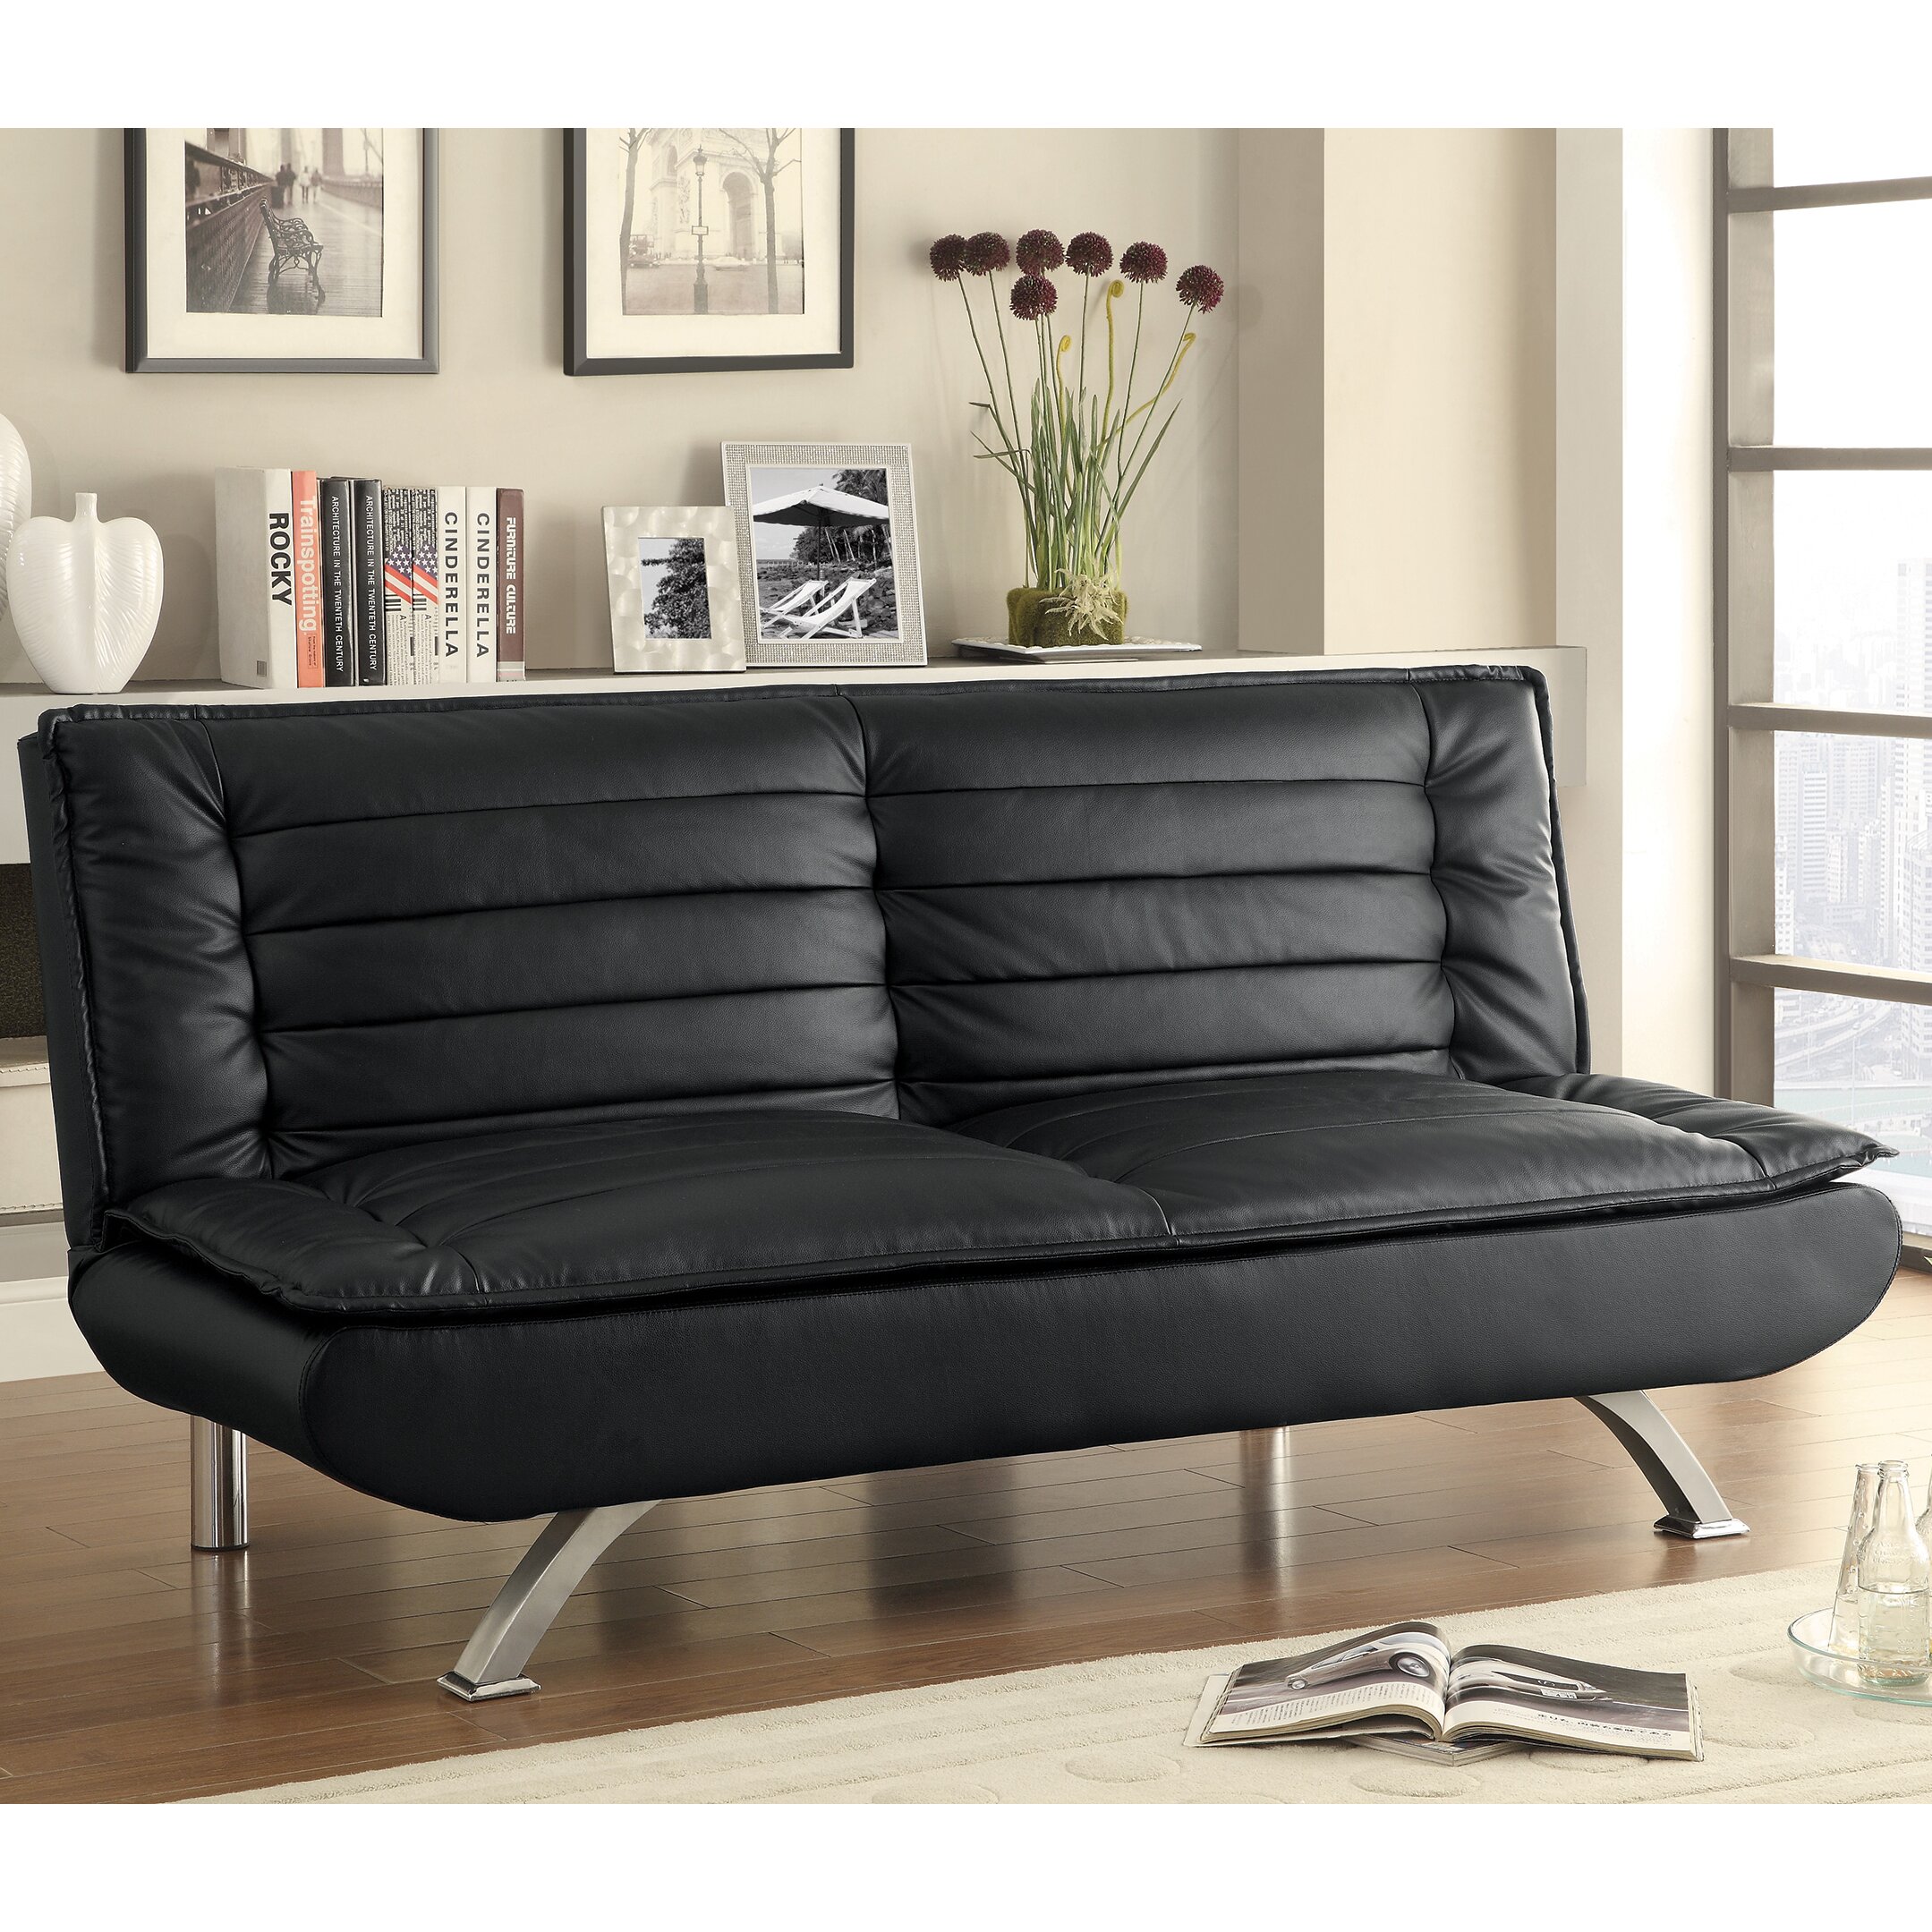 Wildon Home ® Leather Sleeper Sofa & Reviews | Wayfair